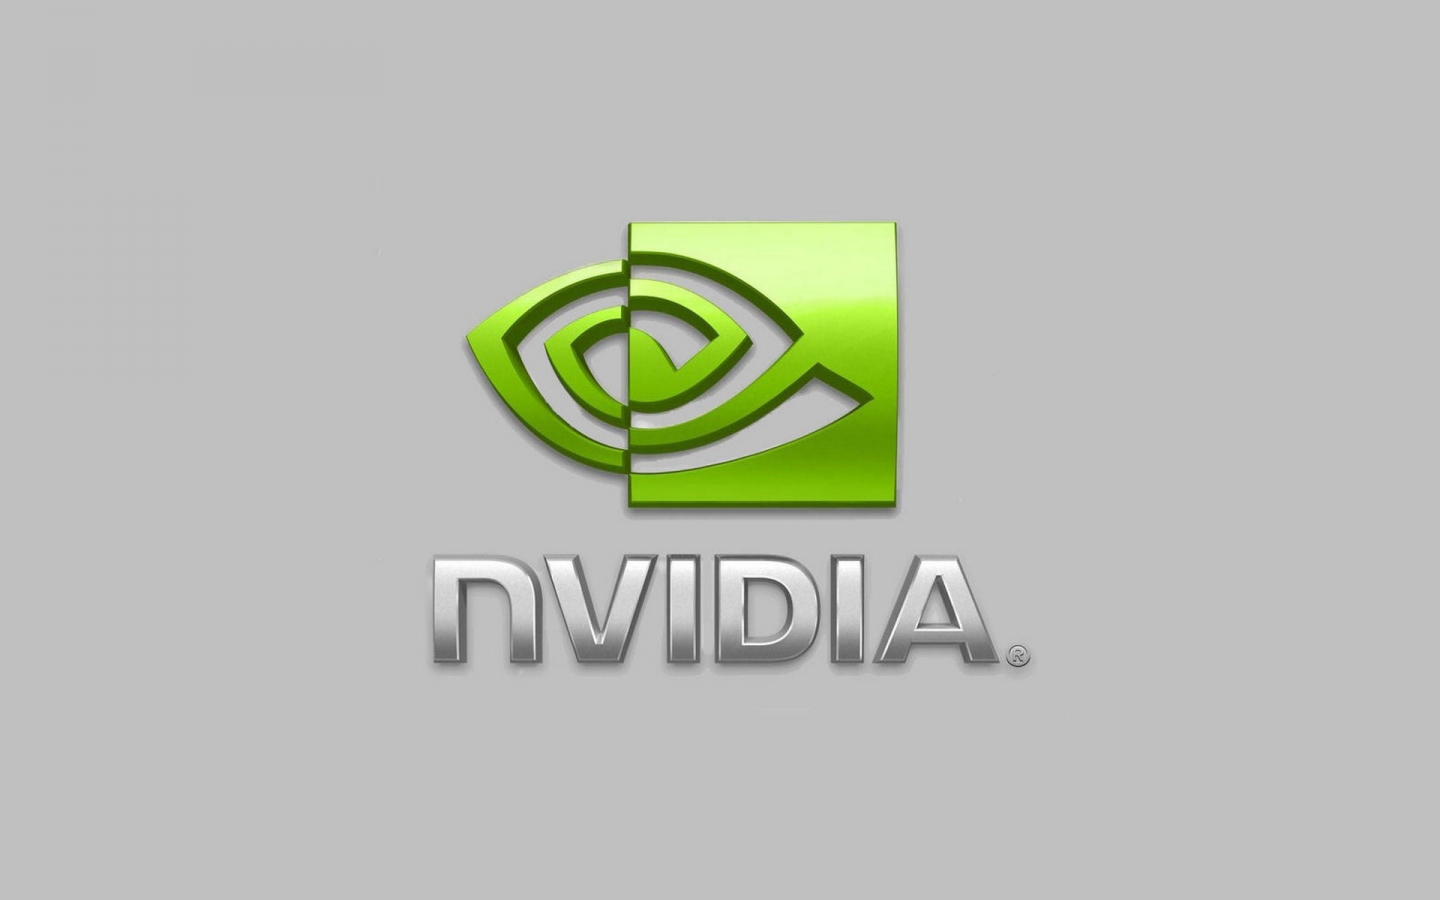 nVIDIA Logo for 1440 x 900 widescreen resolution